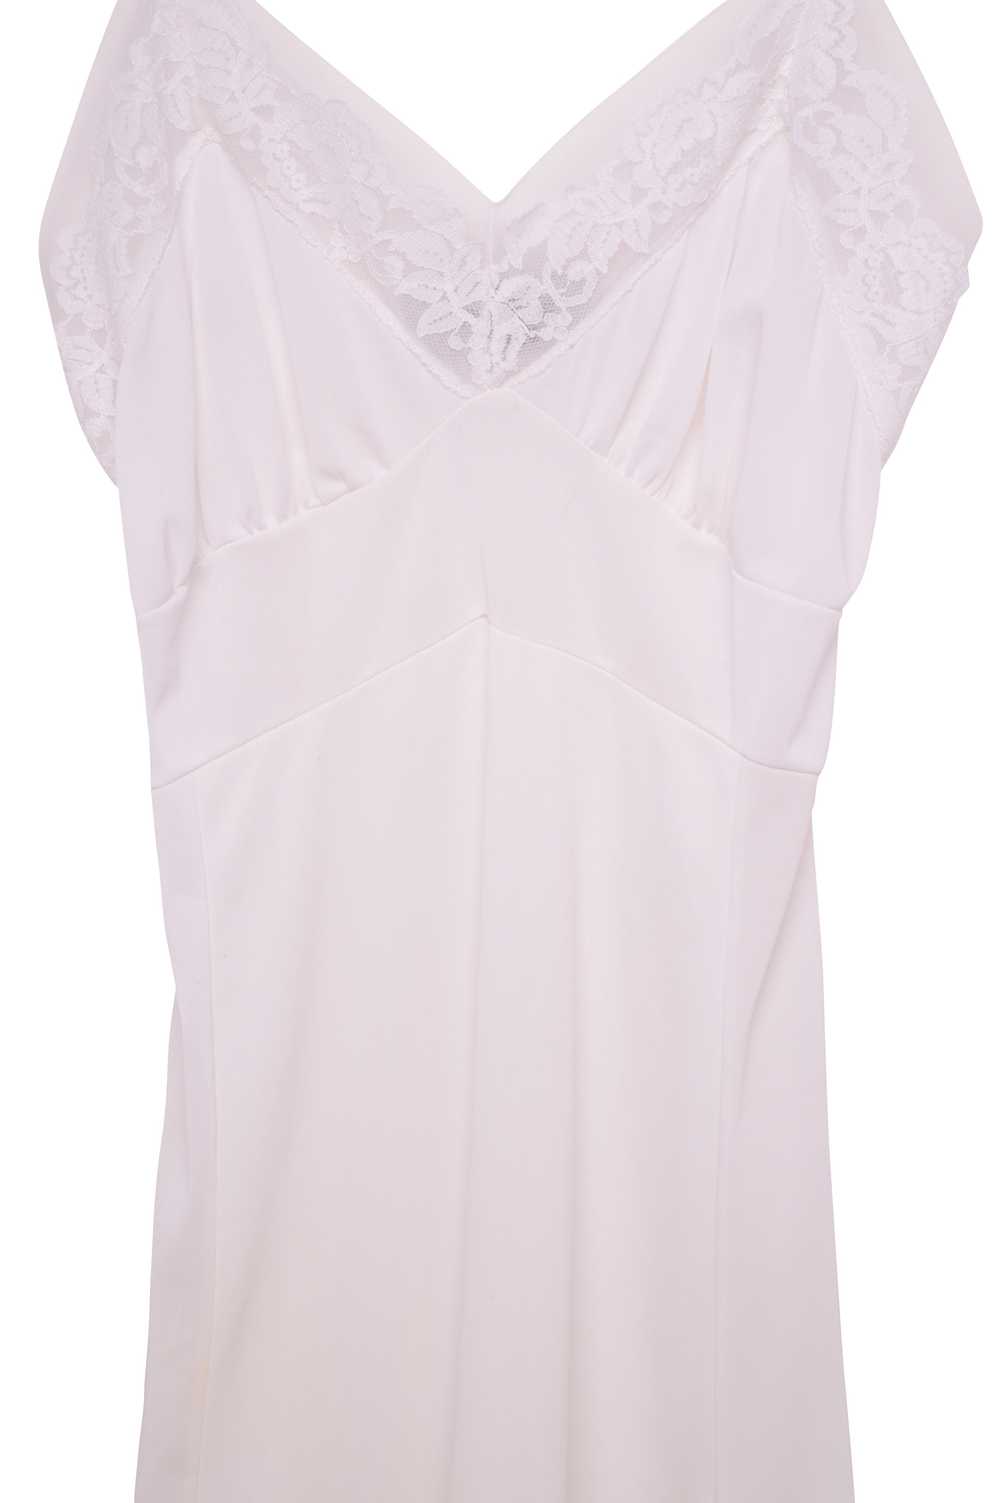 White Lace Panel Slip Dress - image 2